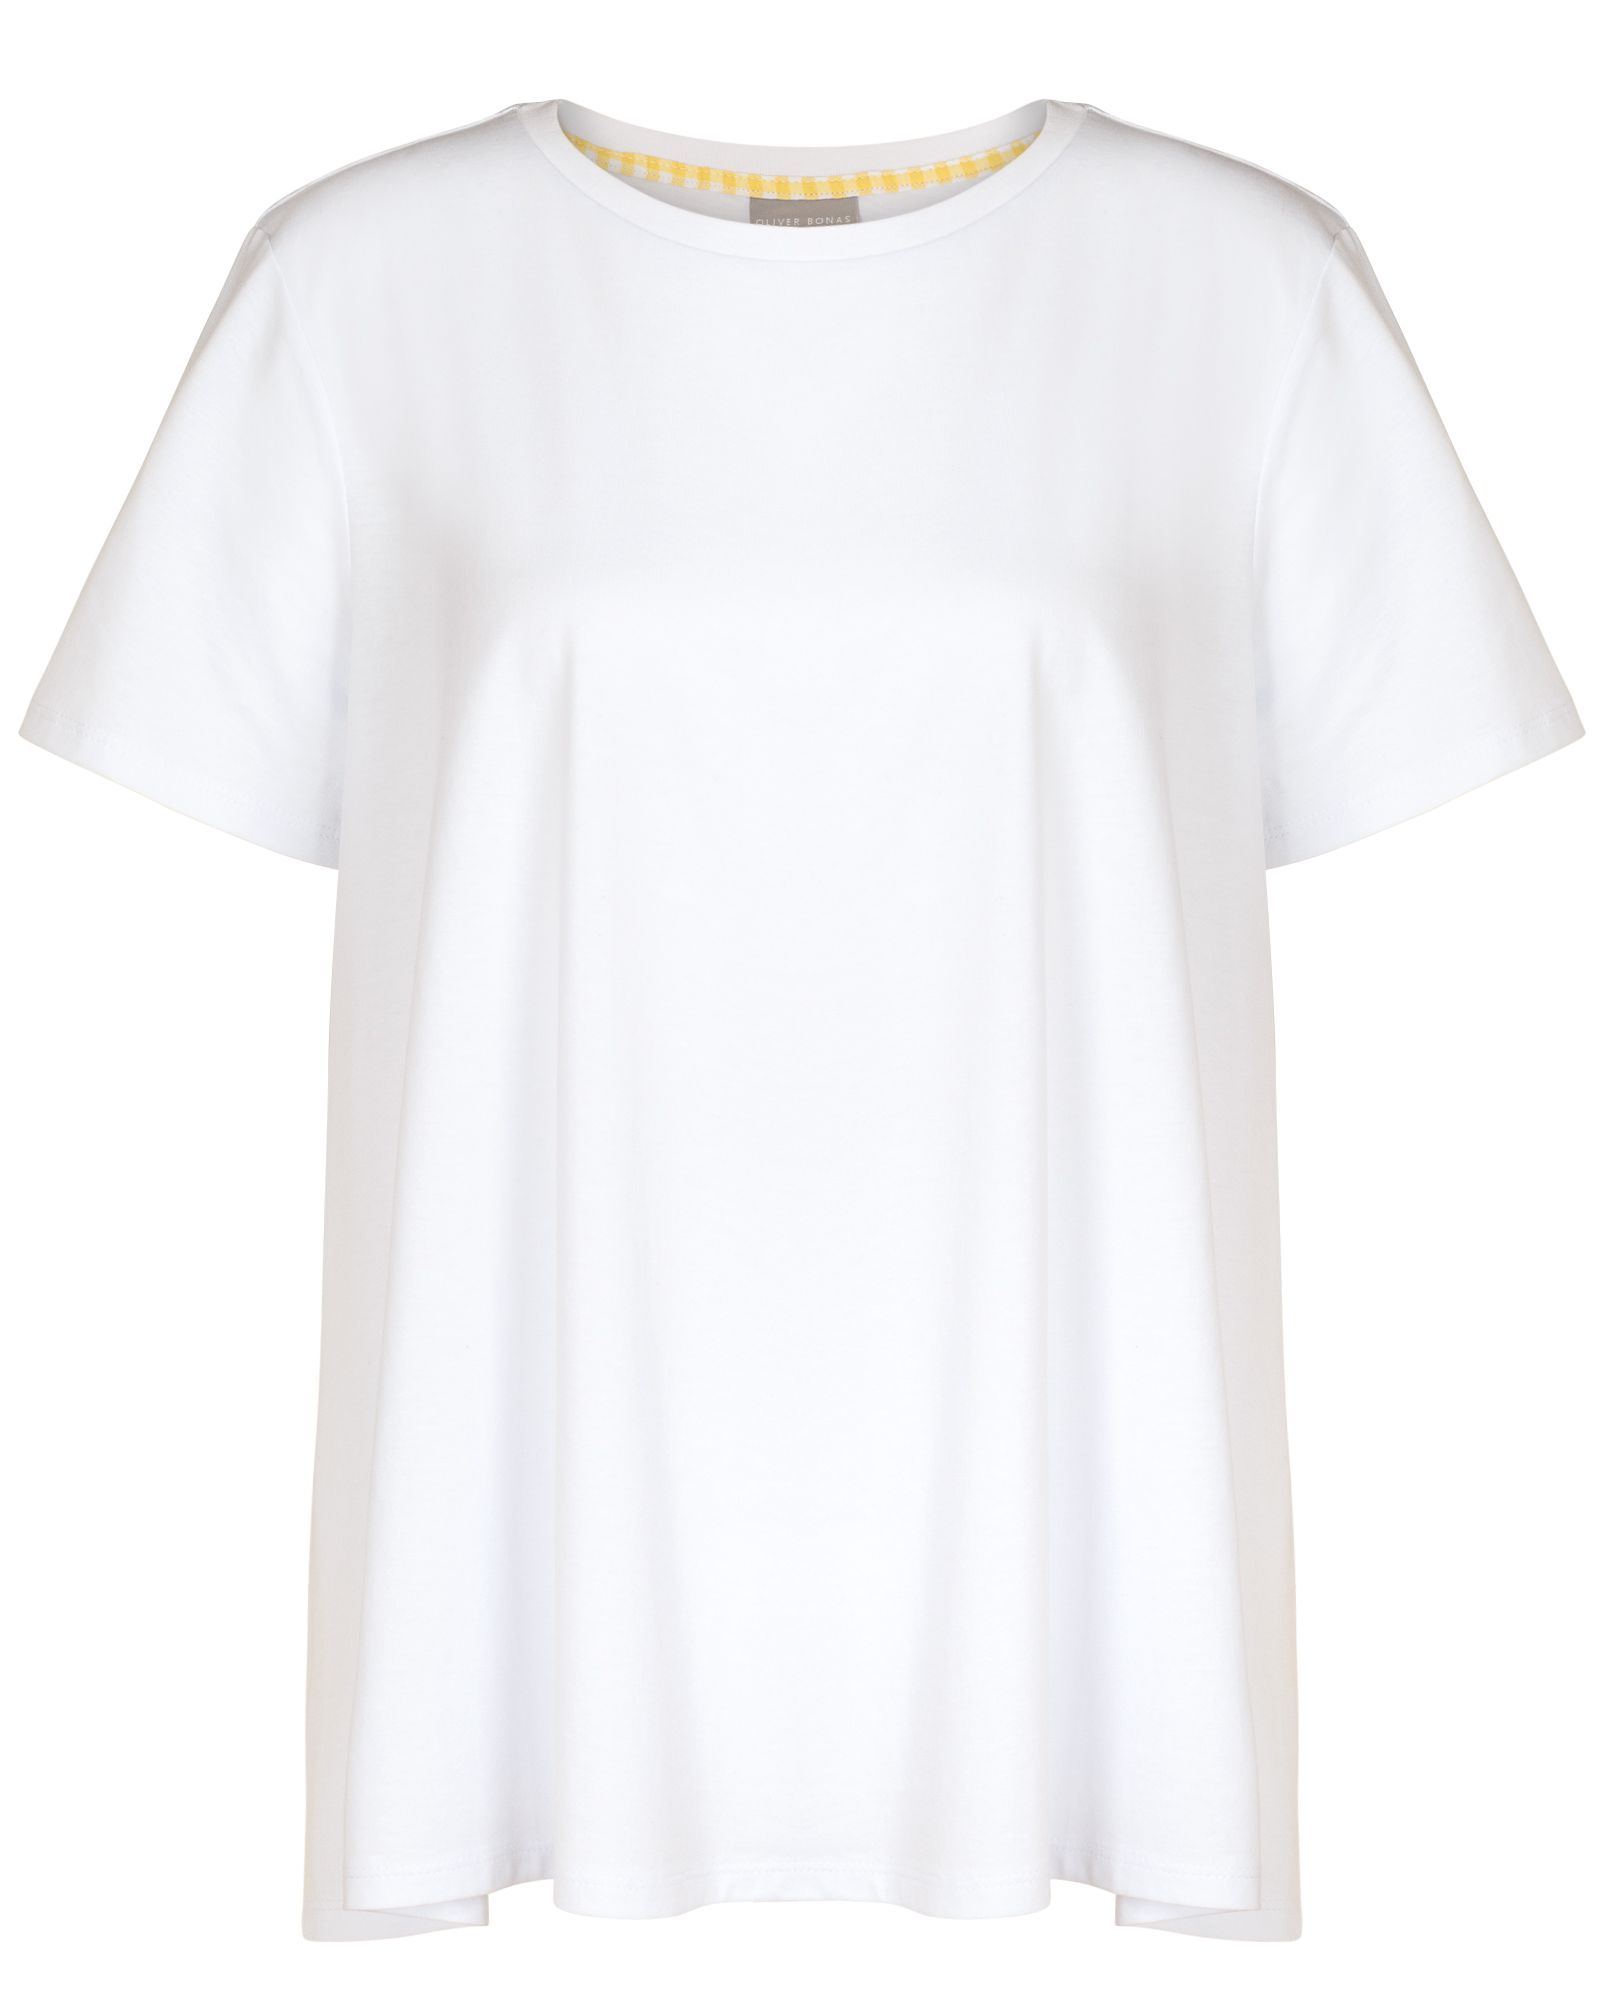 Gingham Back White Cotton T-Shirt | Oliver Bonas